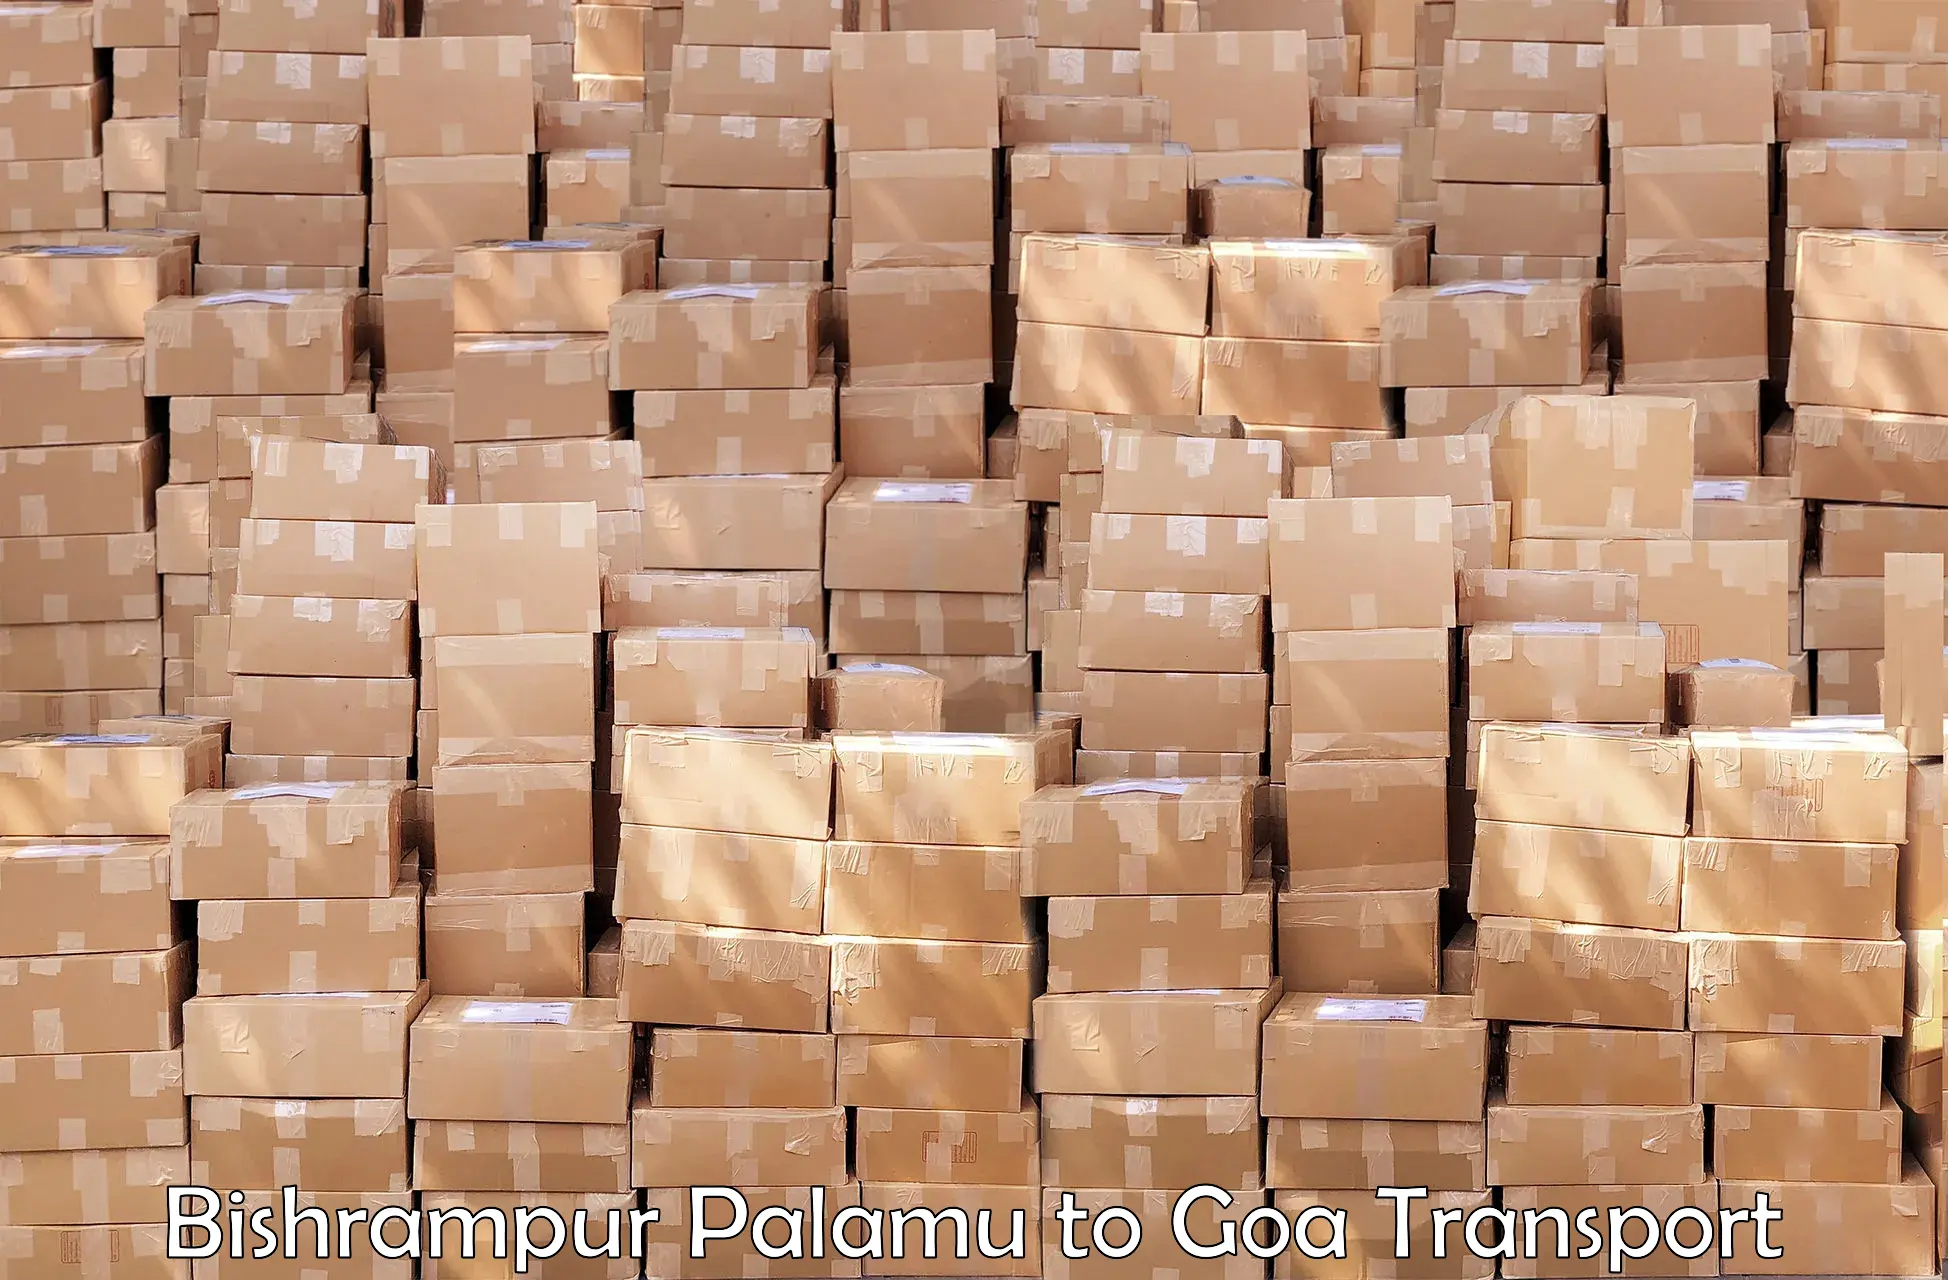 Shipping partner Bishrampur Palamu to Vasco da Gama